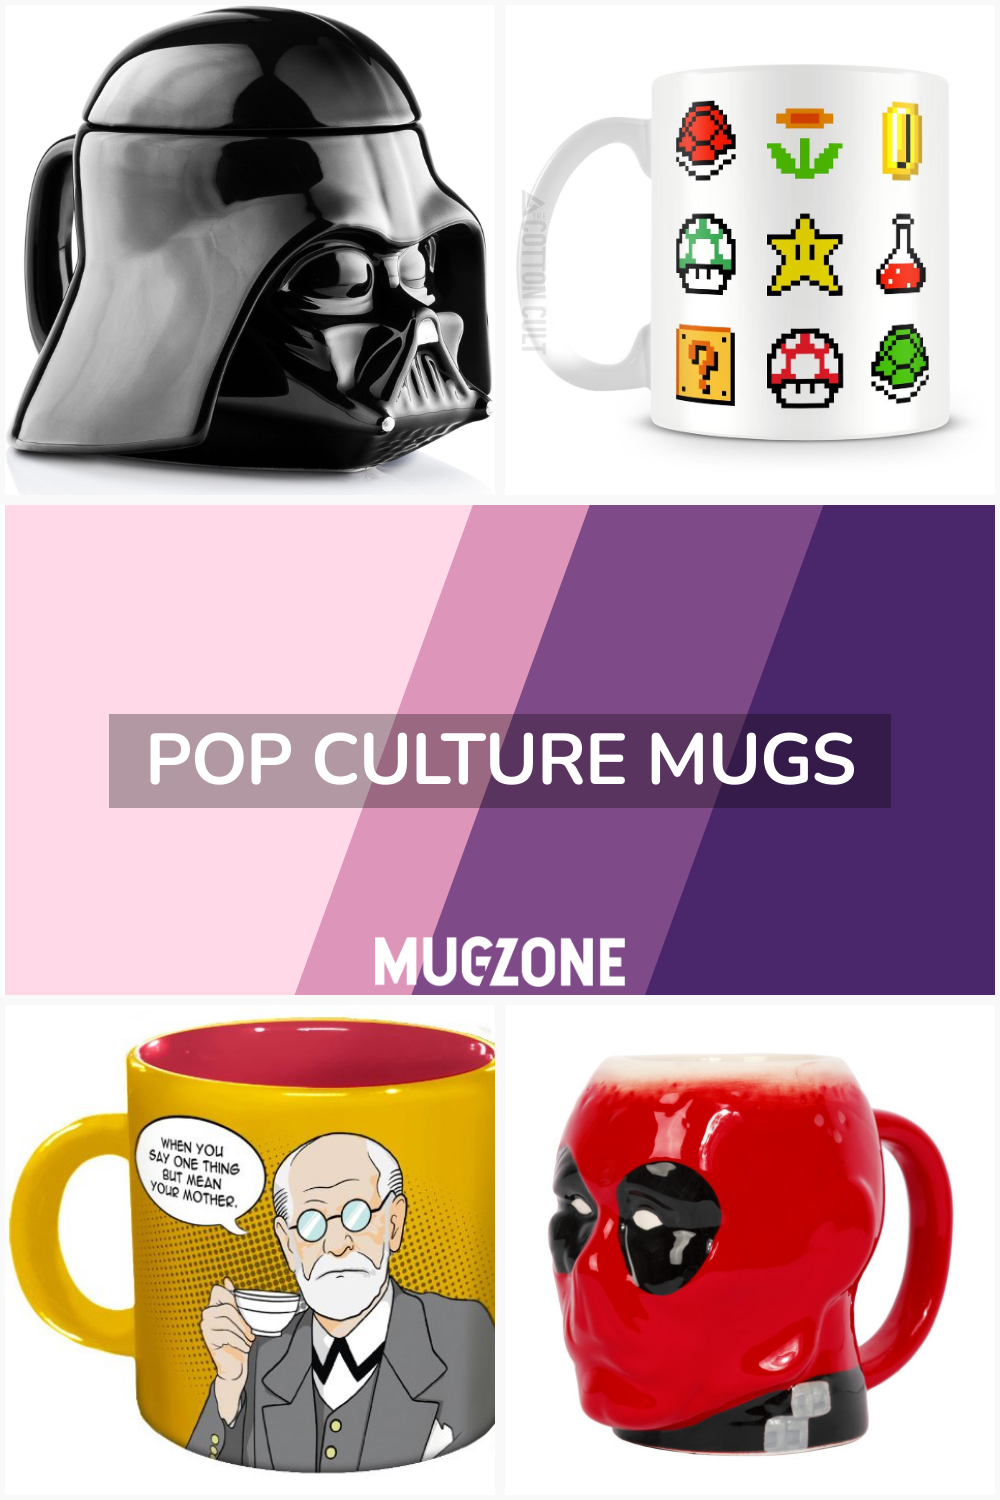 Pop Culture Mugs // Mug Zone